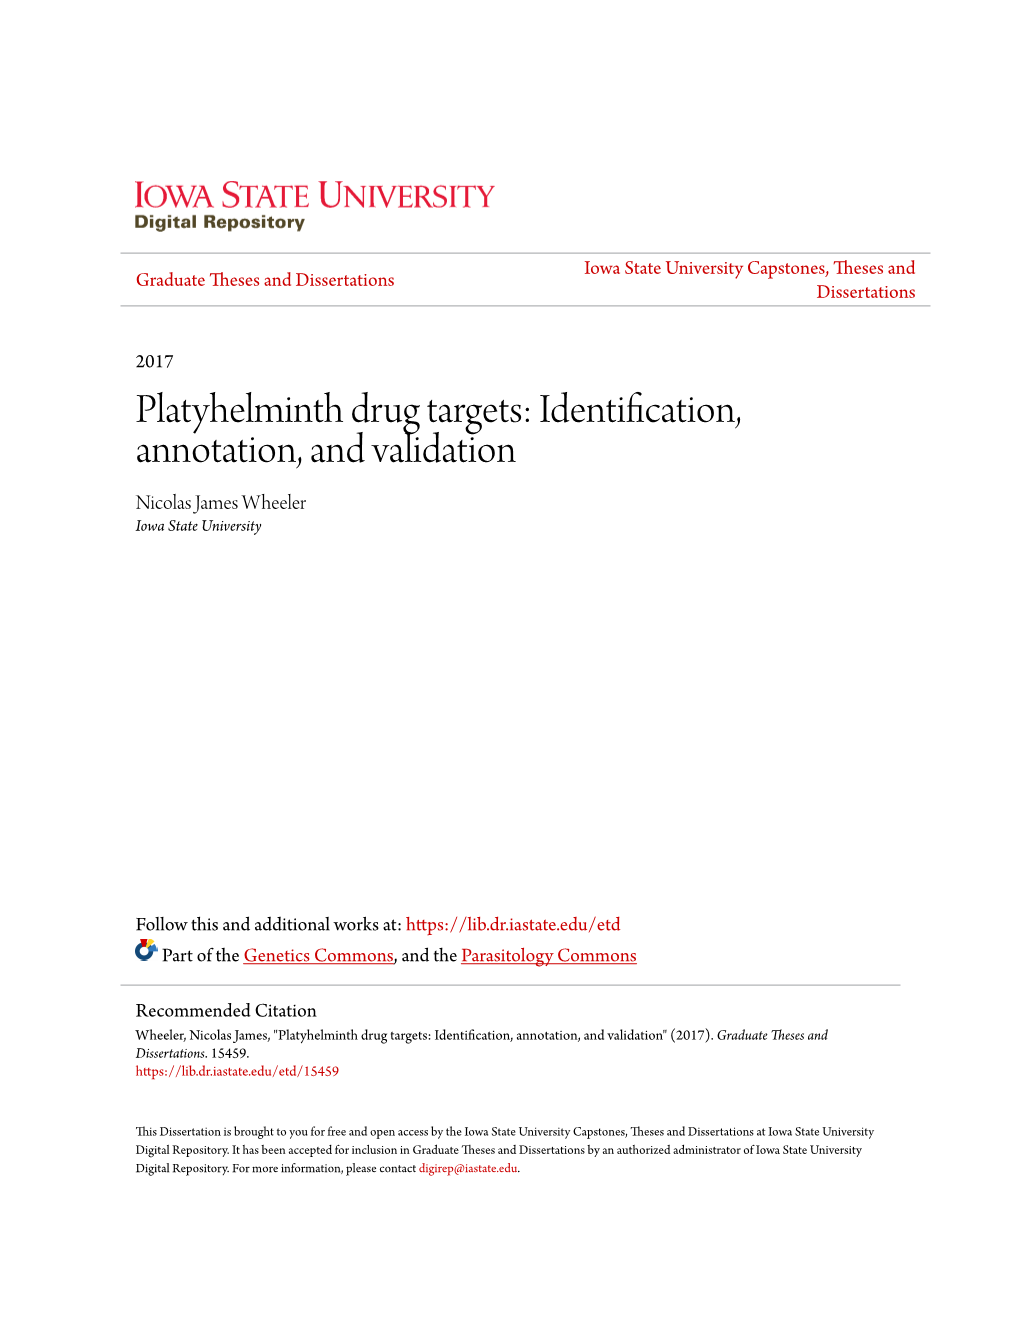 Platyhelminth Drug Targets: Identification, Annotation, and Validation Nicolas James Wheeler Iowa State University